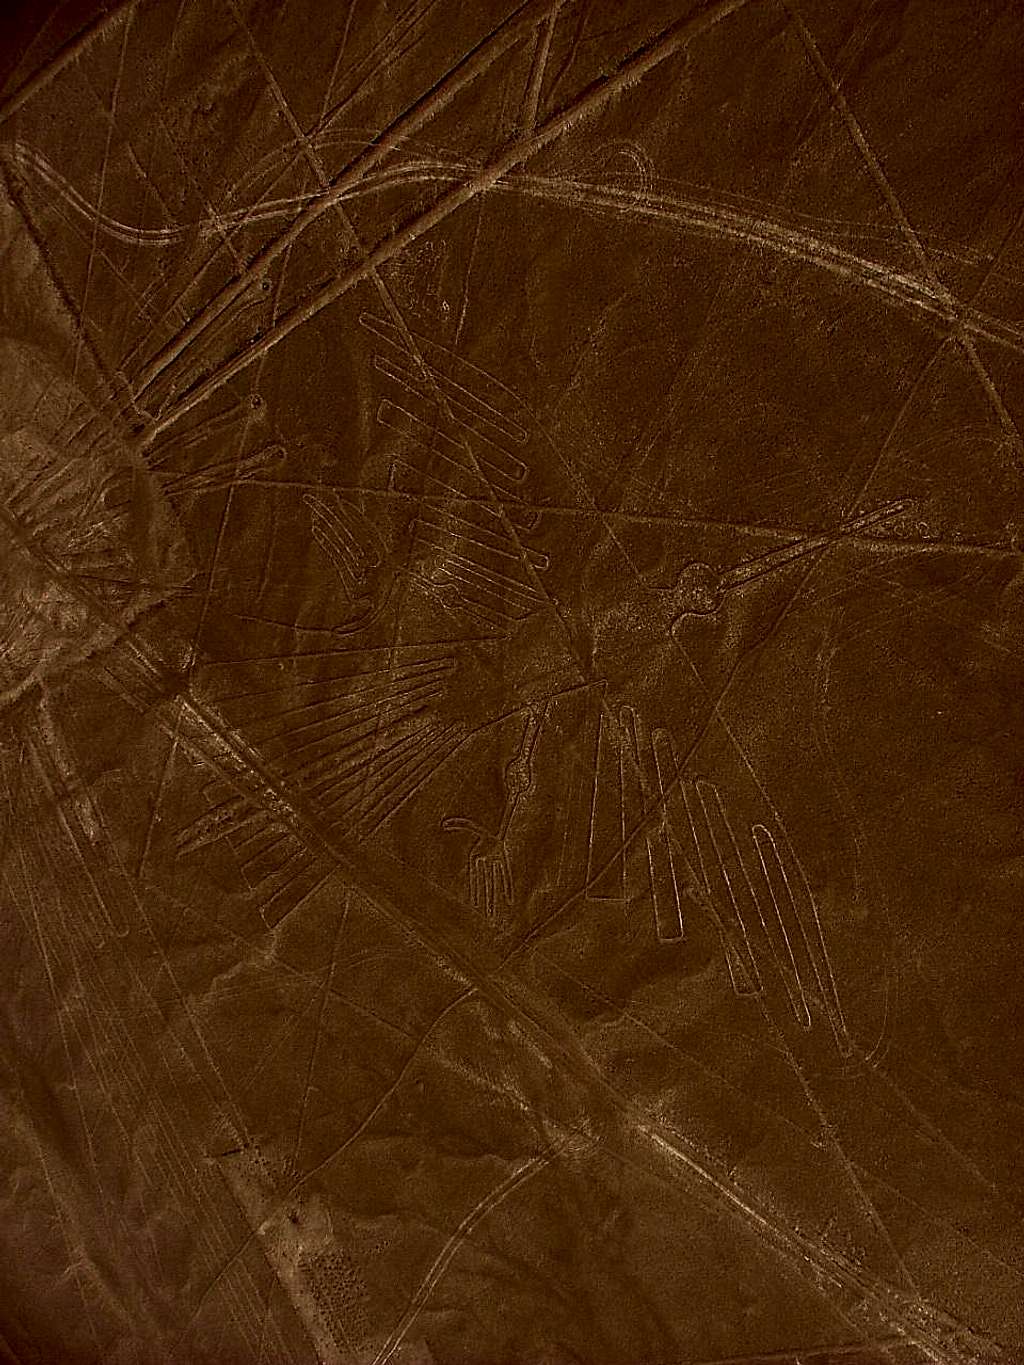 Nazca Lines/Ruins. Ica, Peru.